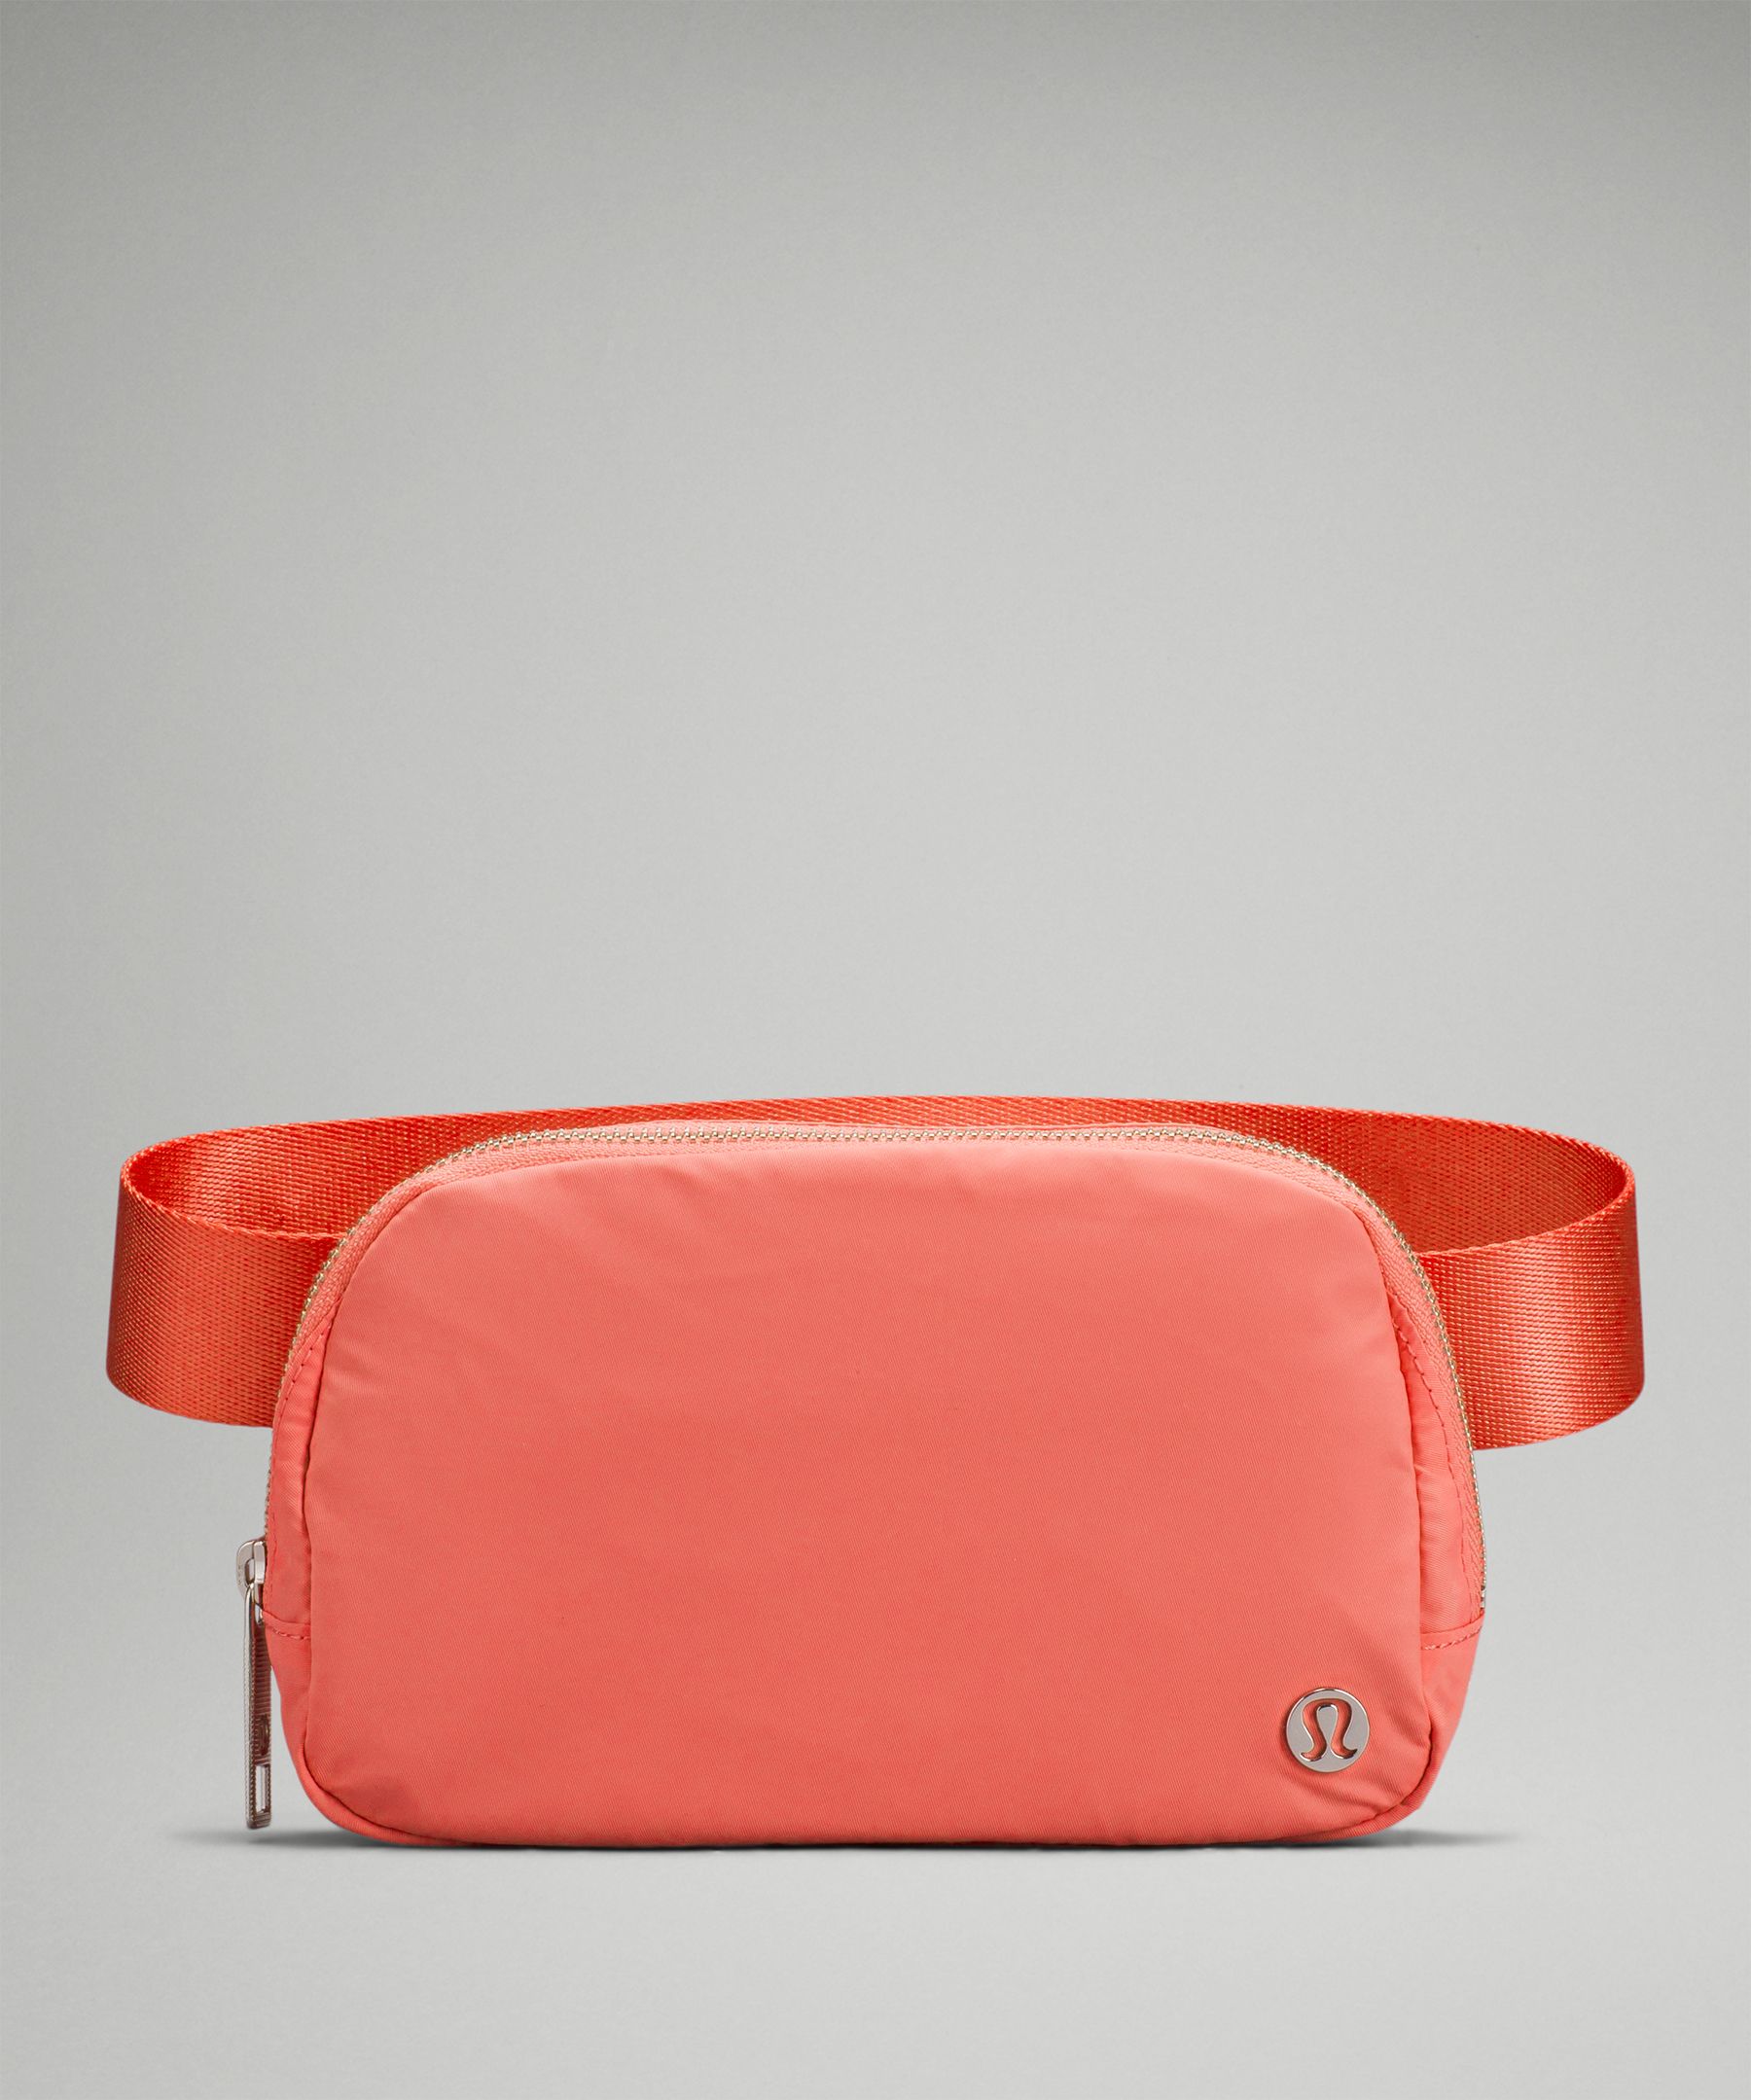 Lululemon Everywhere Belt Bag 1L Pink Pastel Pink Clay